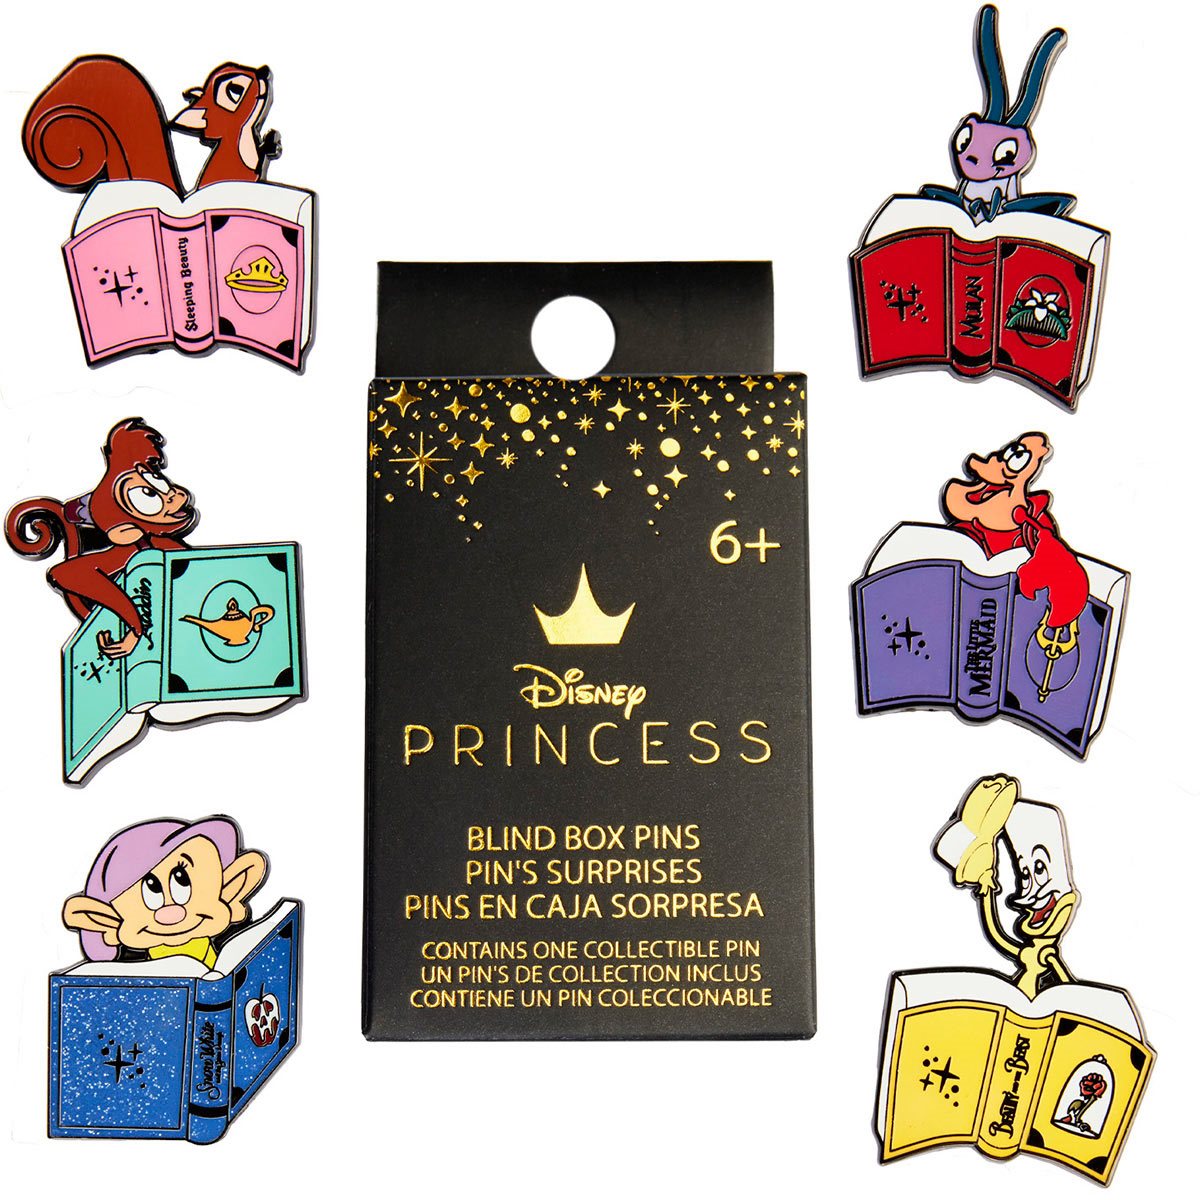 Disney: Princess Books Classics Loungefly Mini Backpack